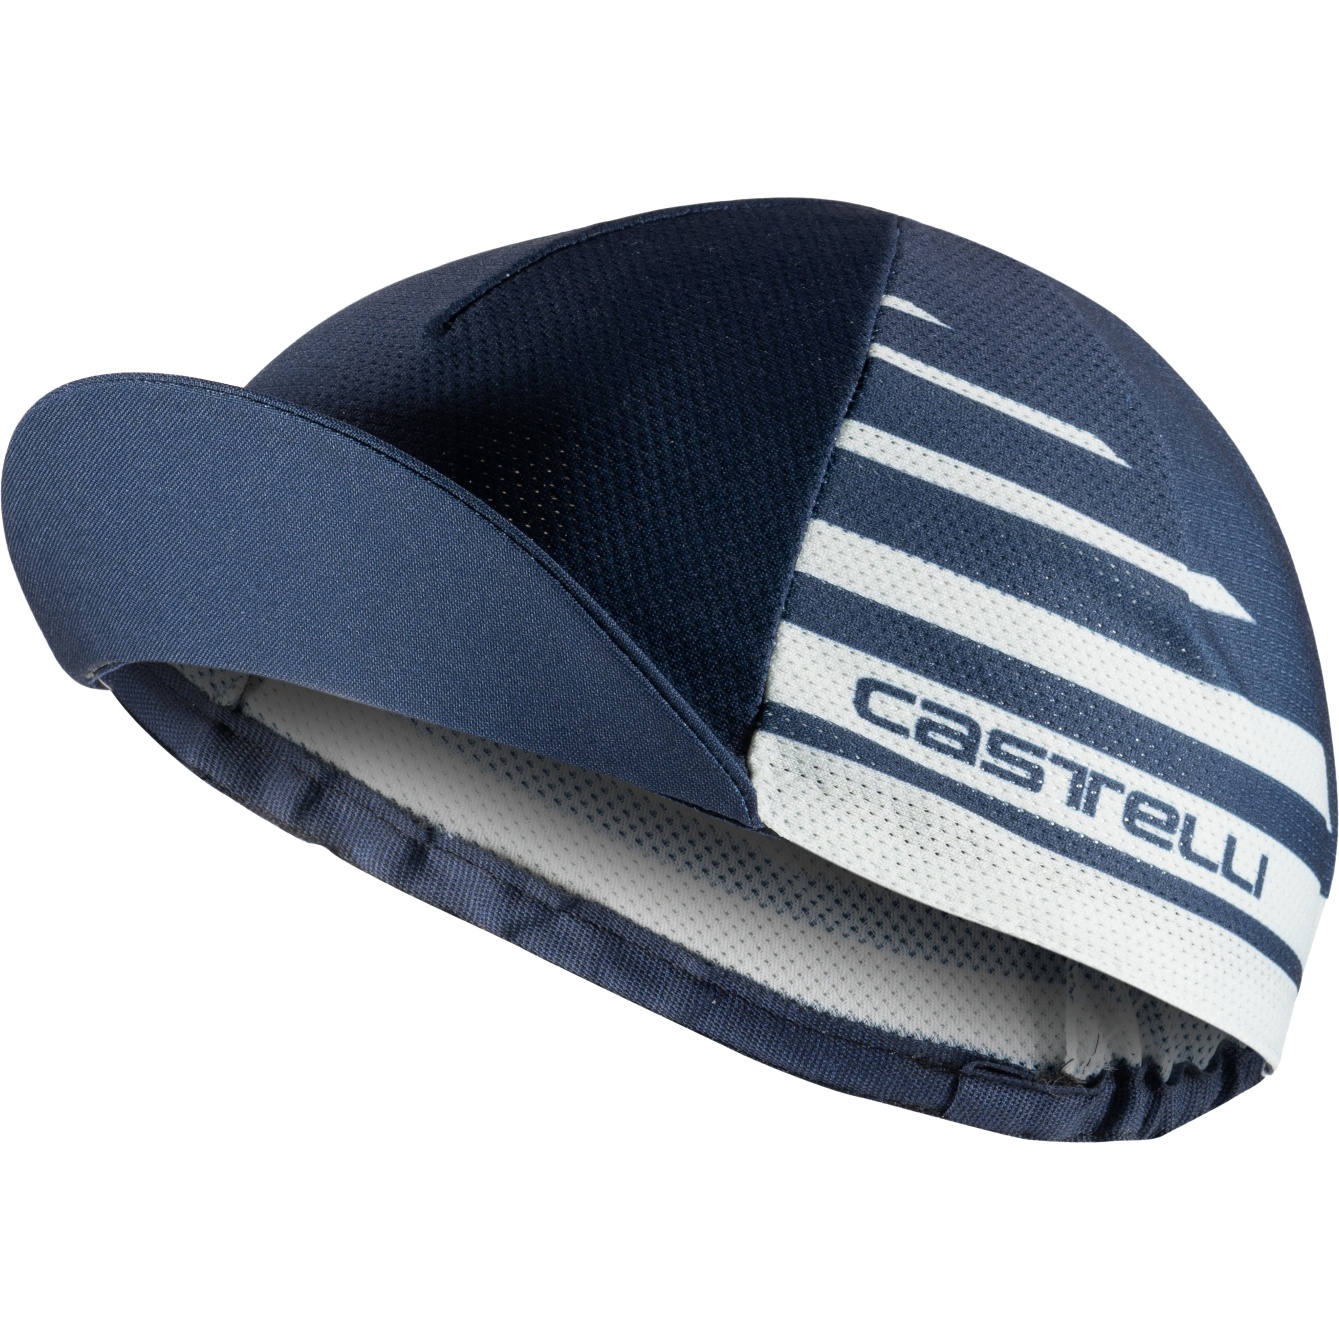 Picture of Castelli Classico Cap - belgian blue/silver grey 424